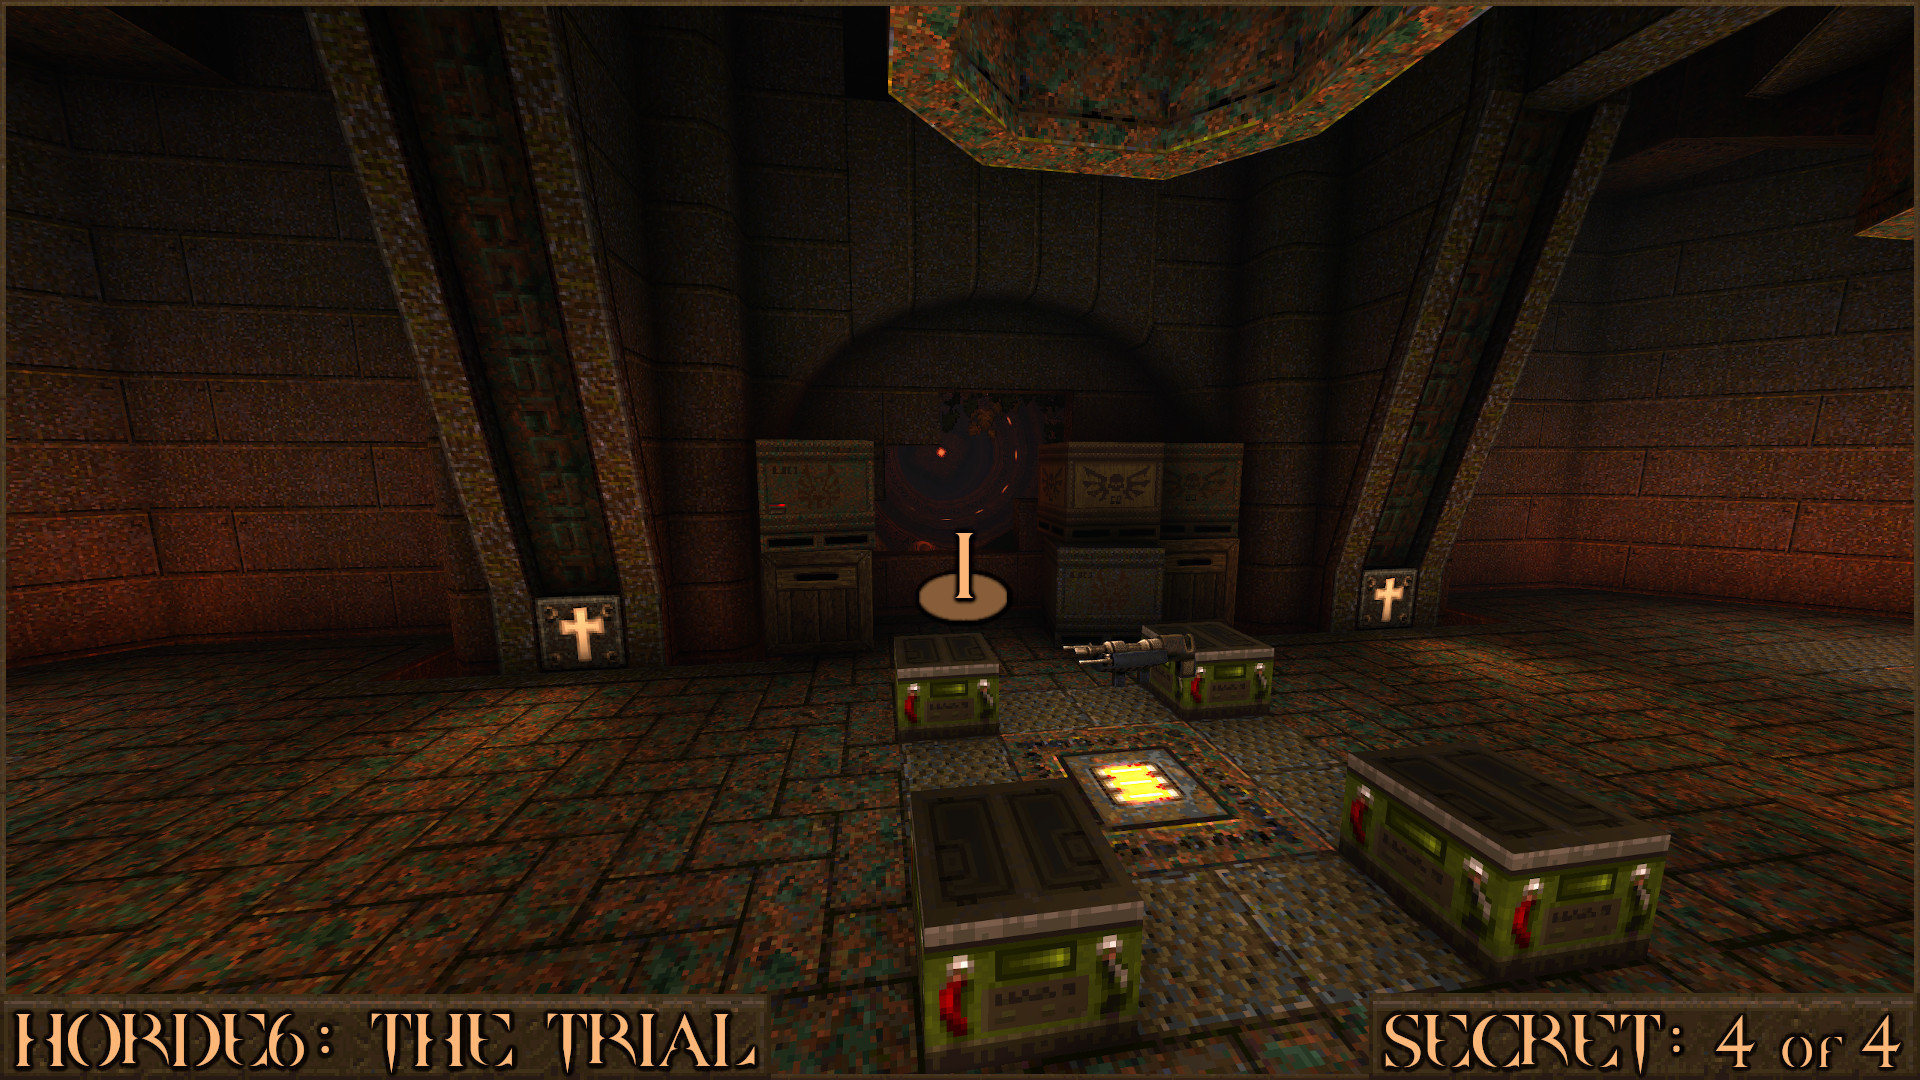 Quake - Finding all the Secrets - HORDE6: The Trial - 7B0A4DA